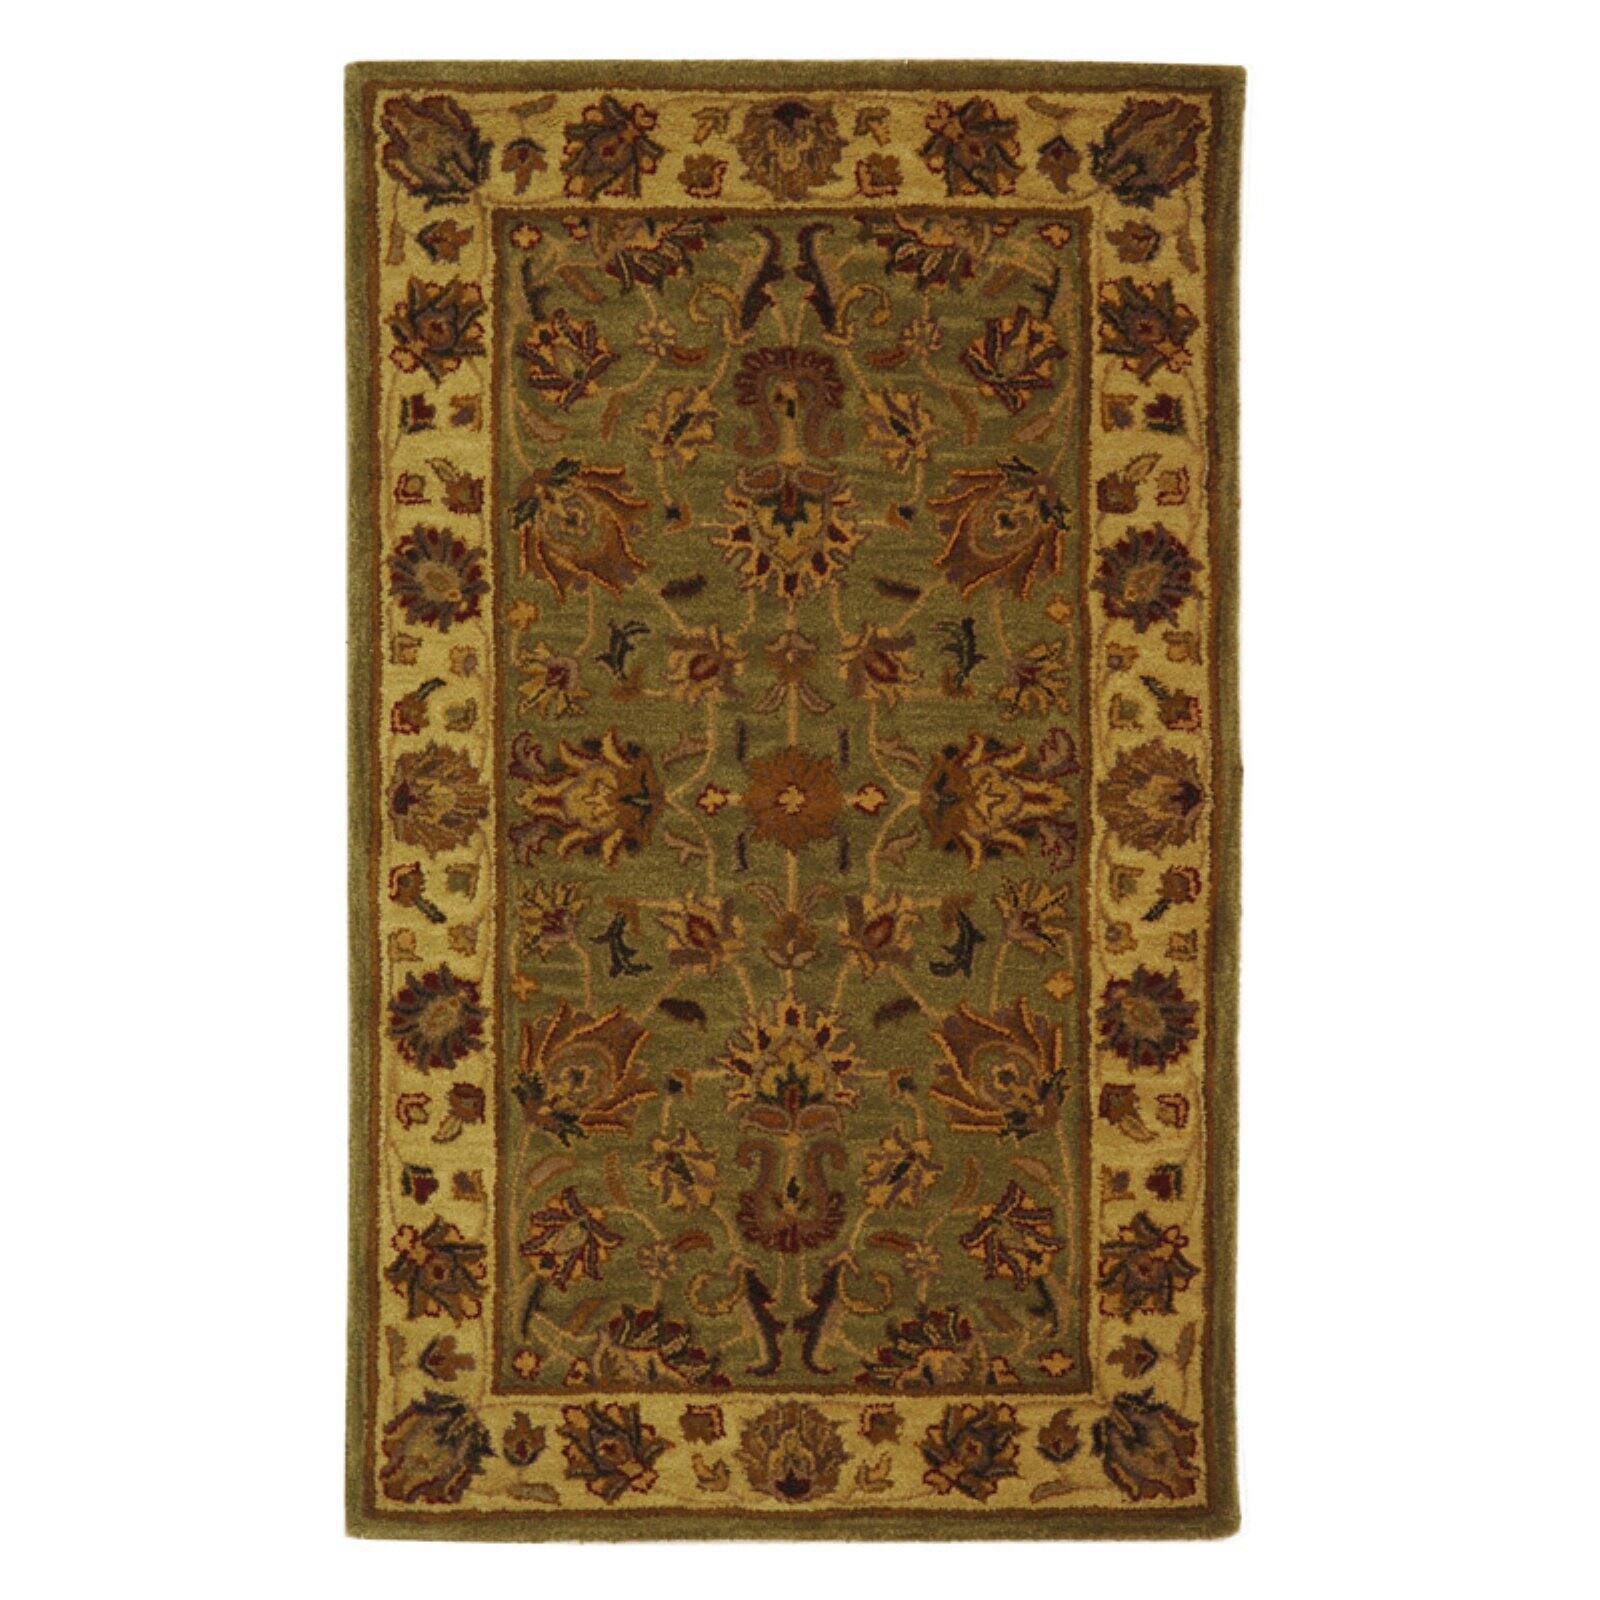 SAFAVIEH Heritage Regis Traditional Wool Area Rug, Green/Gold, 9'6" x 13'6" - image 4 of 10